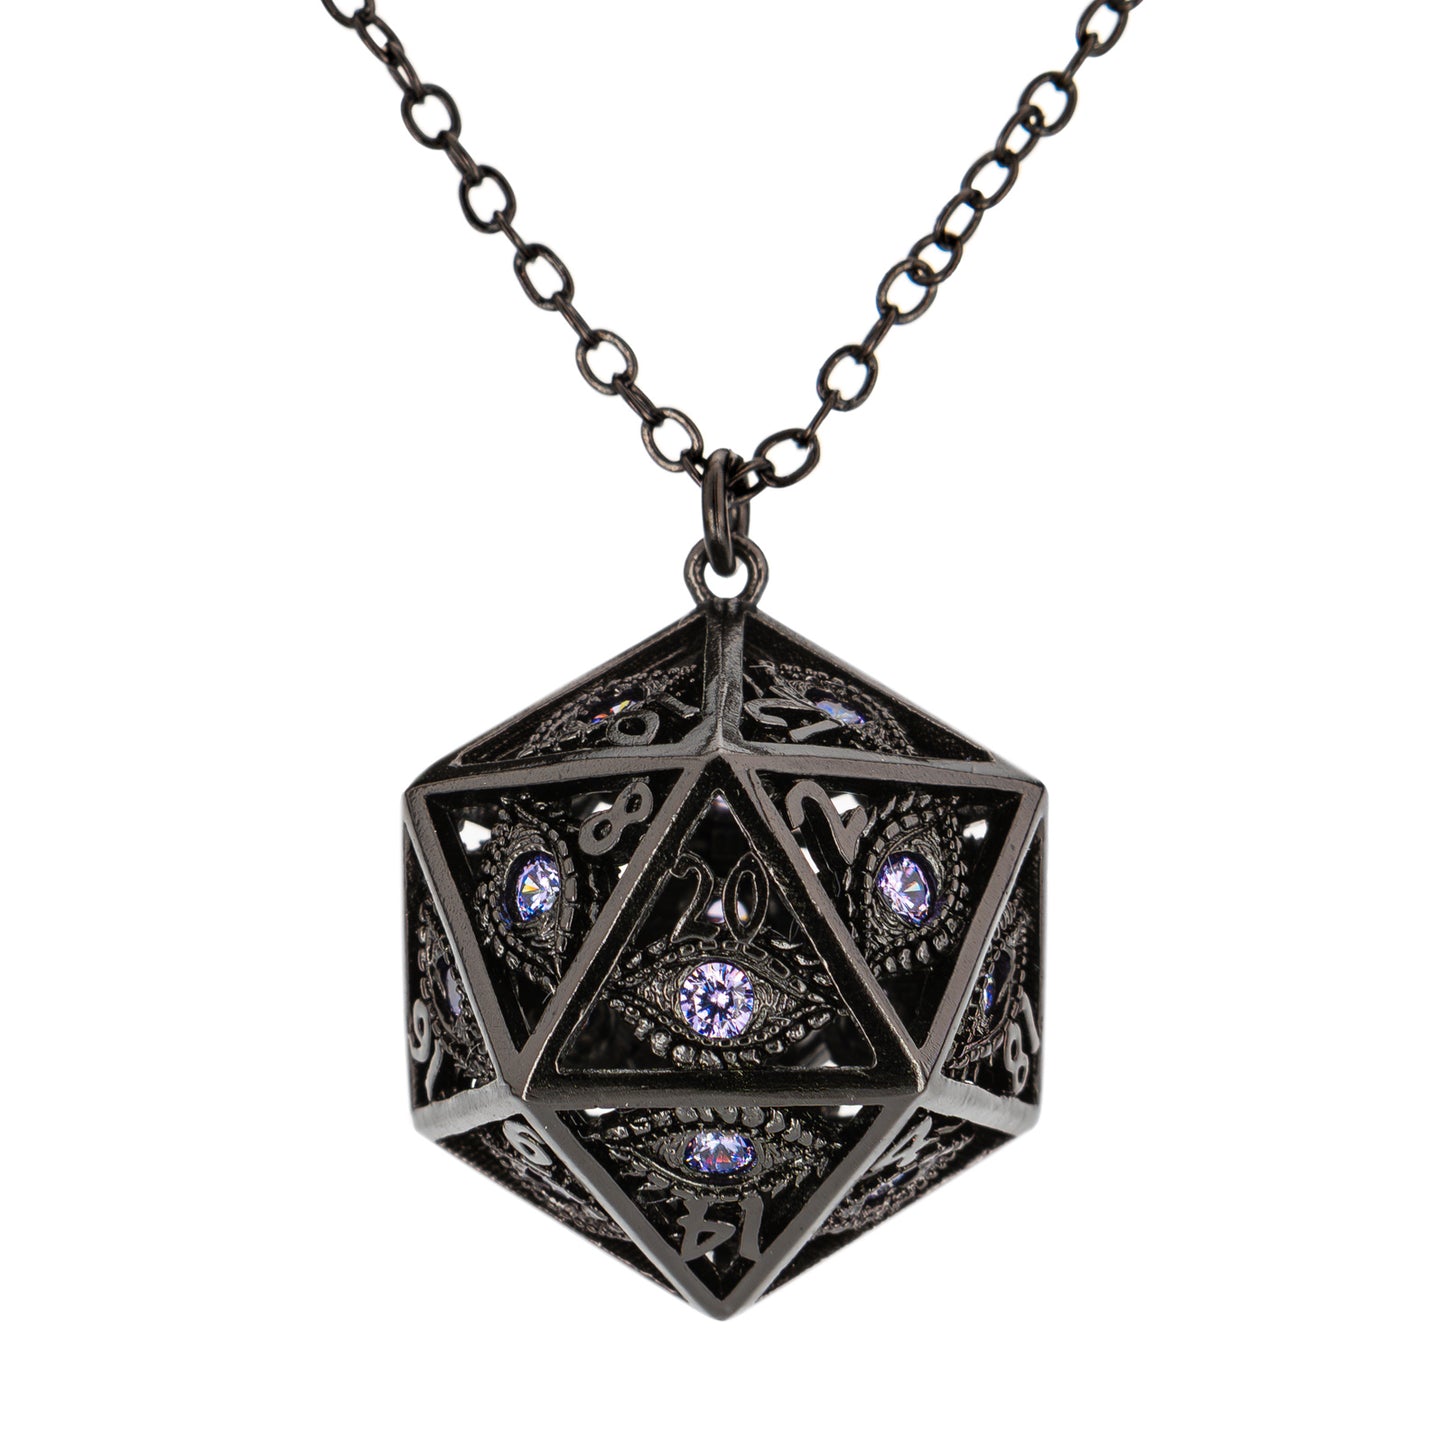 Black Dragon D20 Pendant, Customizable Dice Dragon Necklace